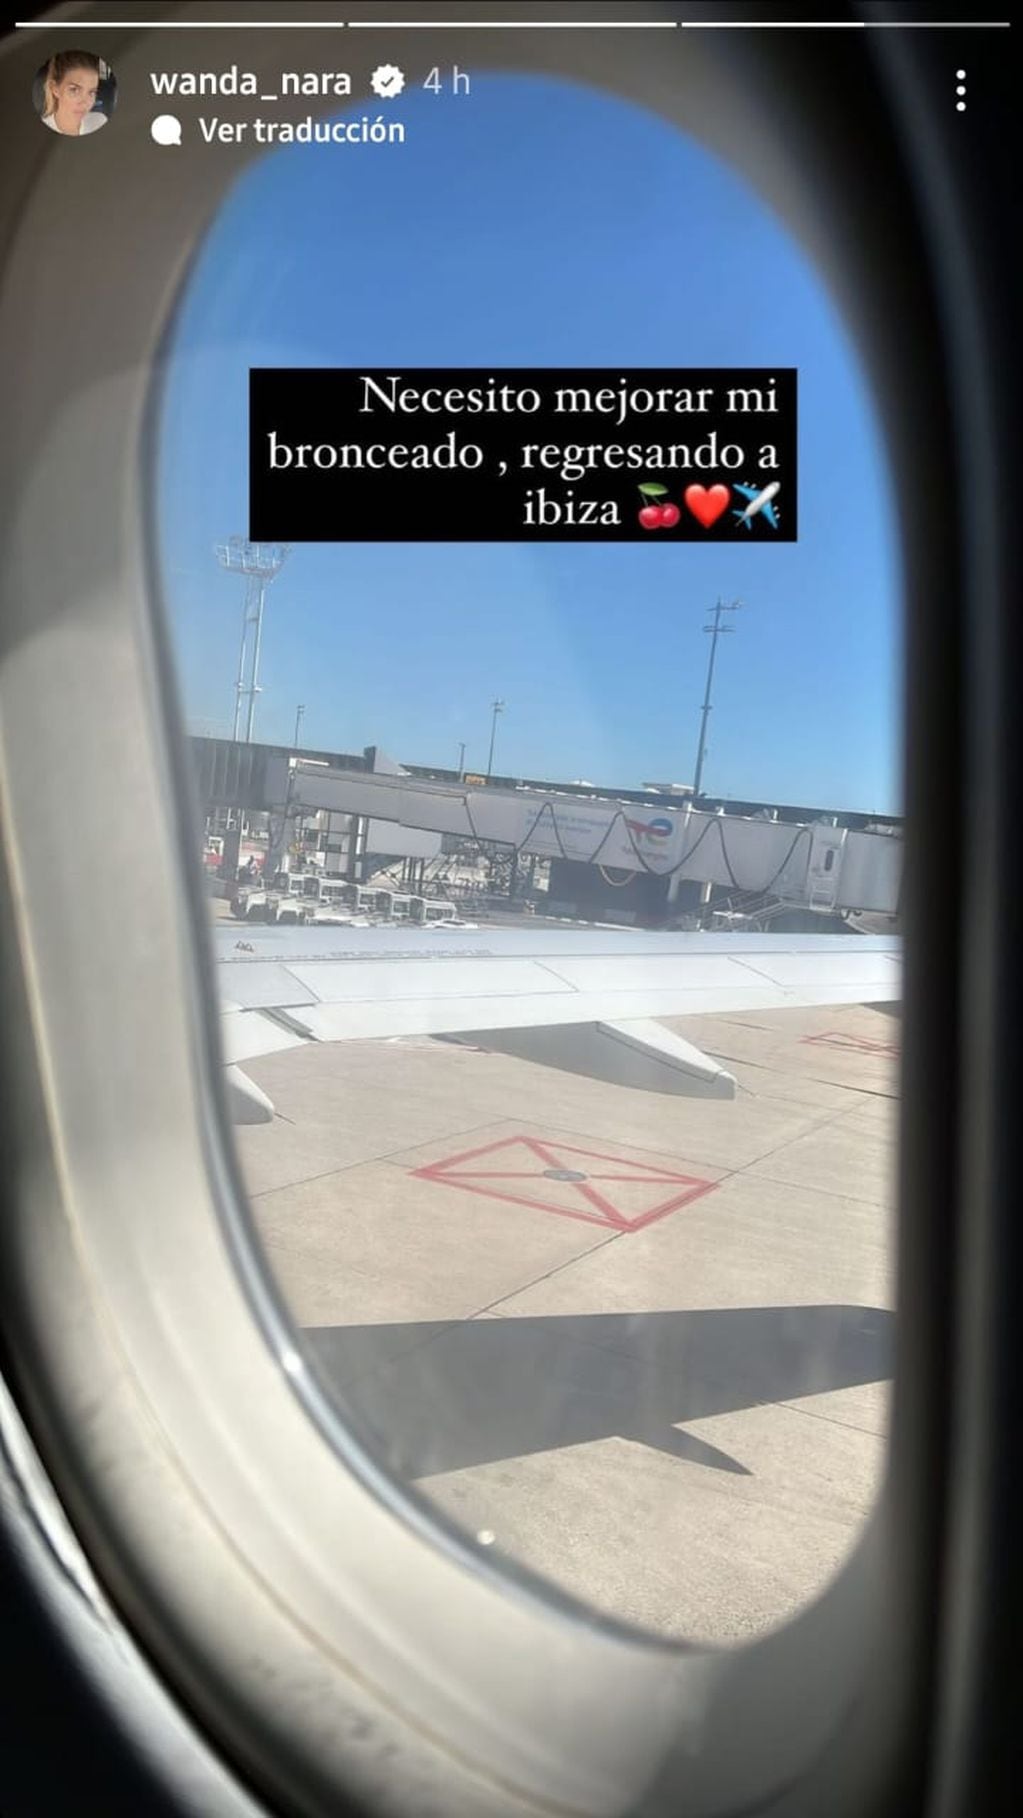 Wanda Nara en el avión rumbo a Ibiza (Captura de pantalla)